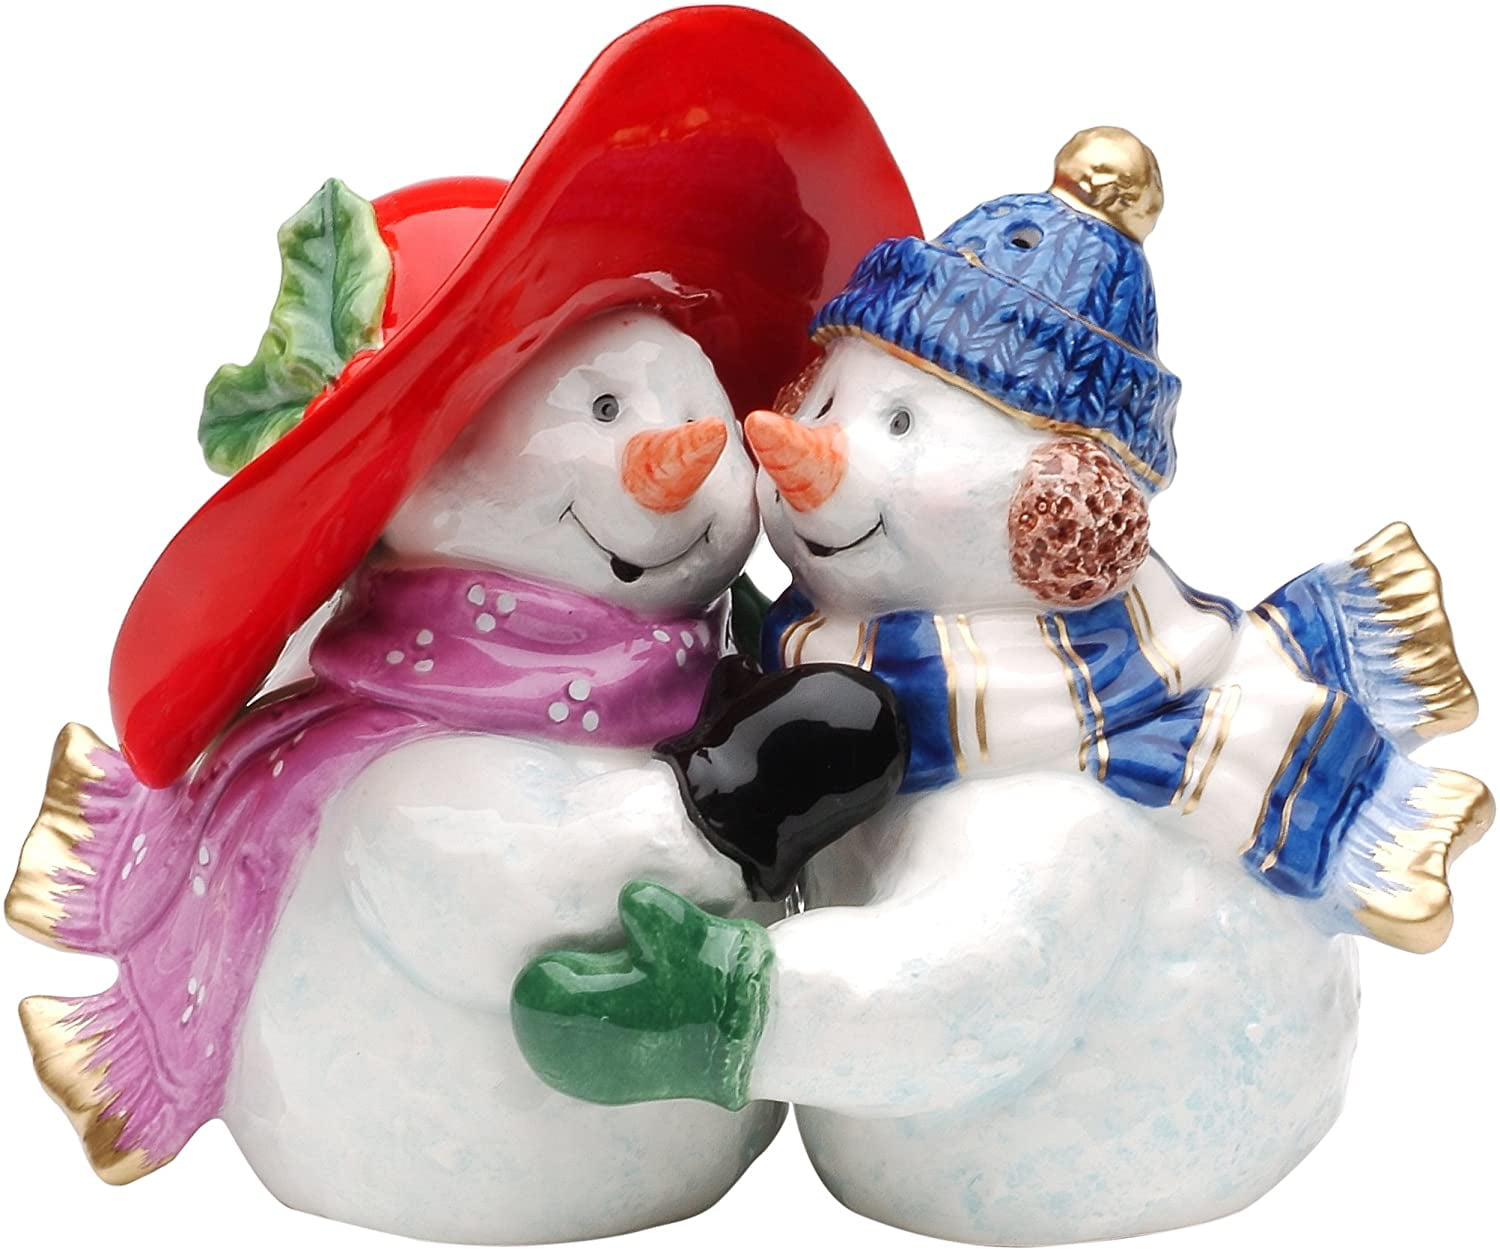 Snowman Collection Ceramic Salt & Pepper Shaker Set  3 3/8"